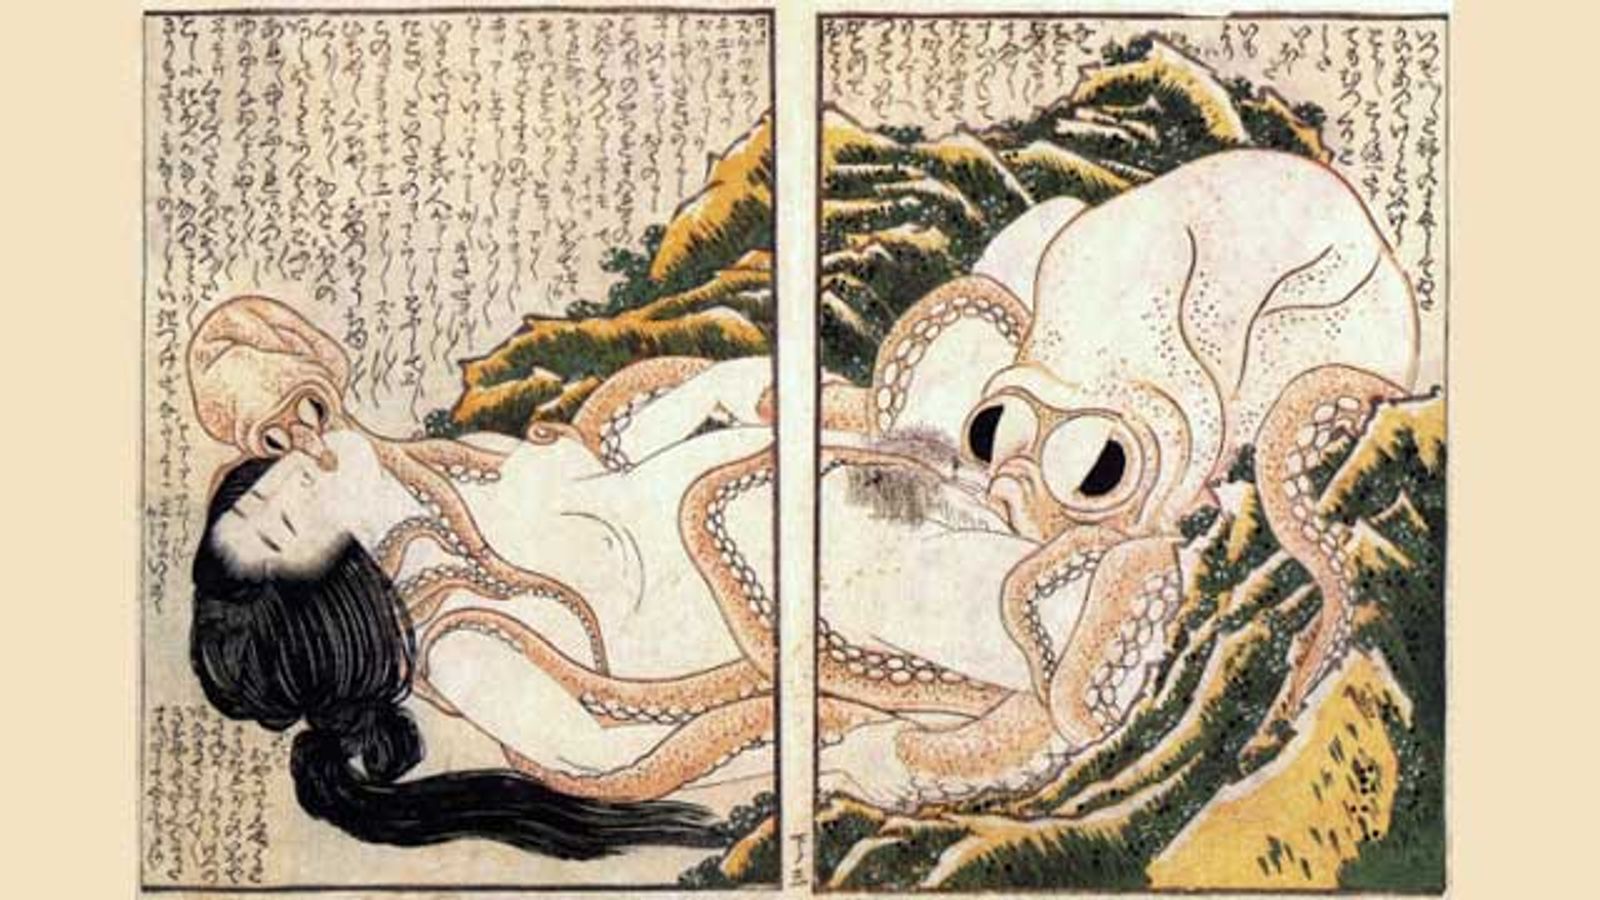 Sexually Explicit 'Shunga' Exhibit: It’s Art, Not Porn!